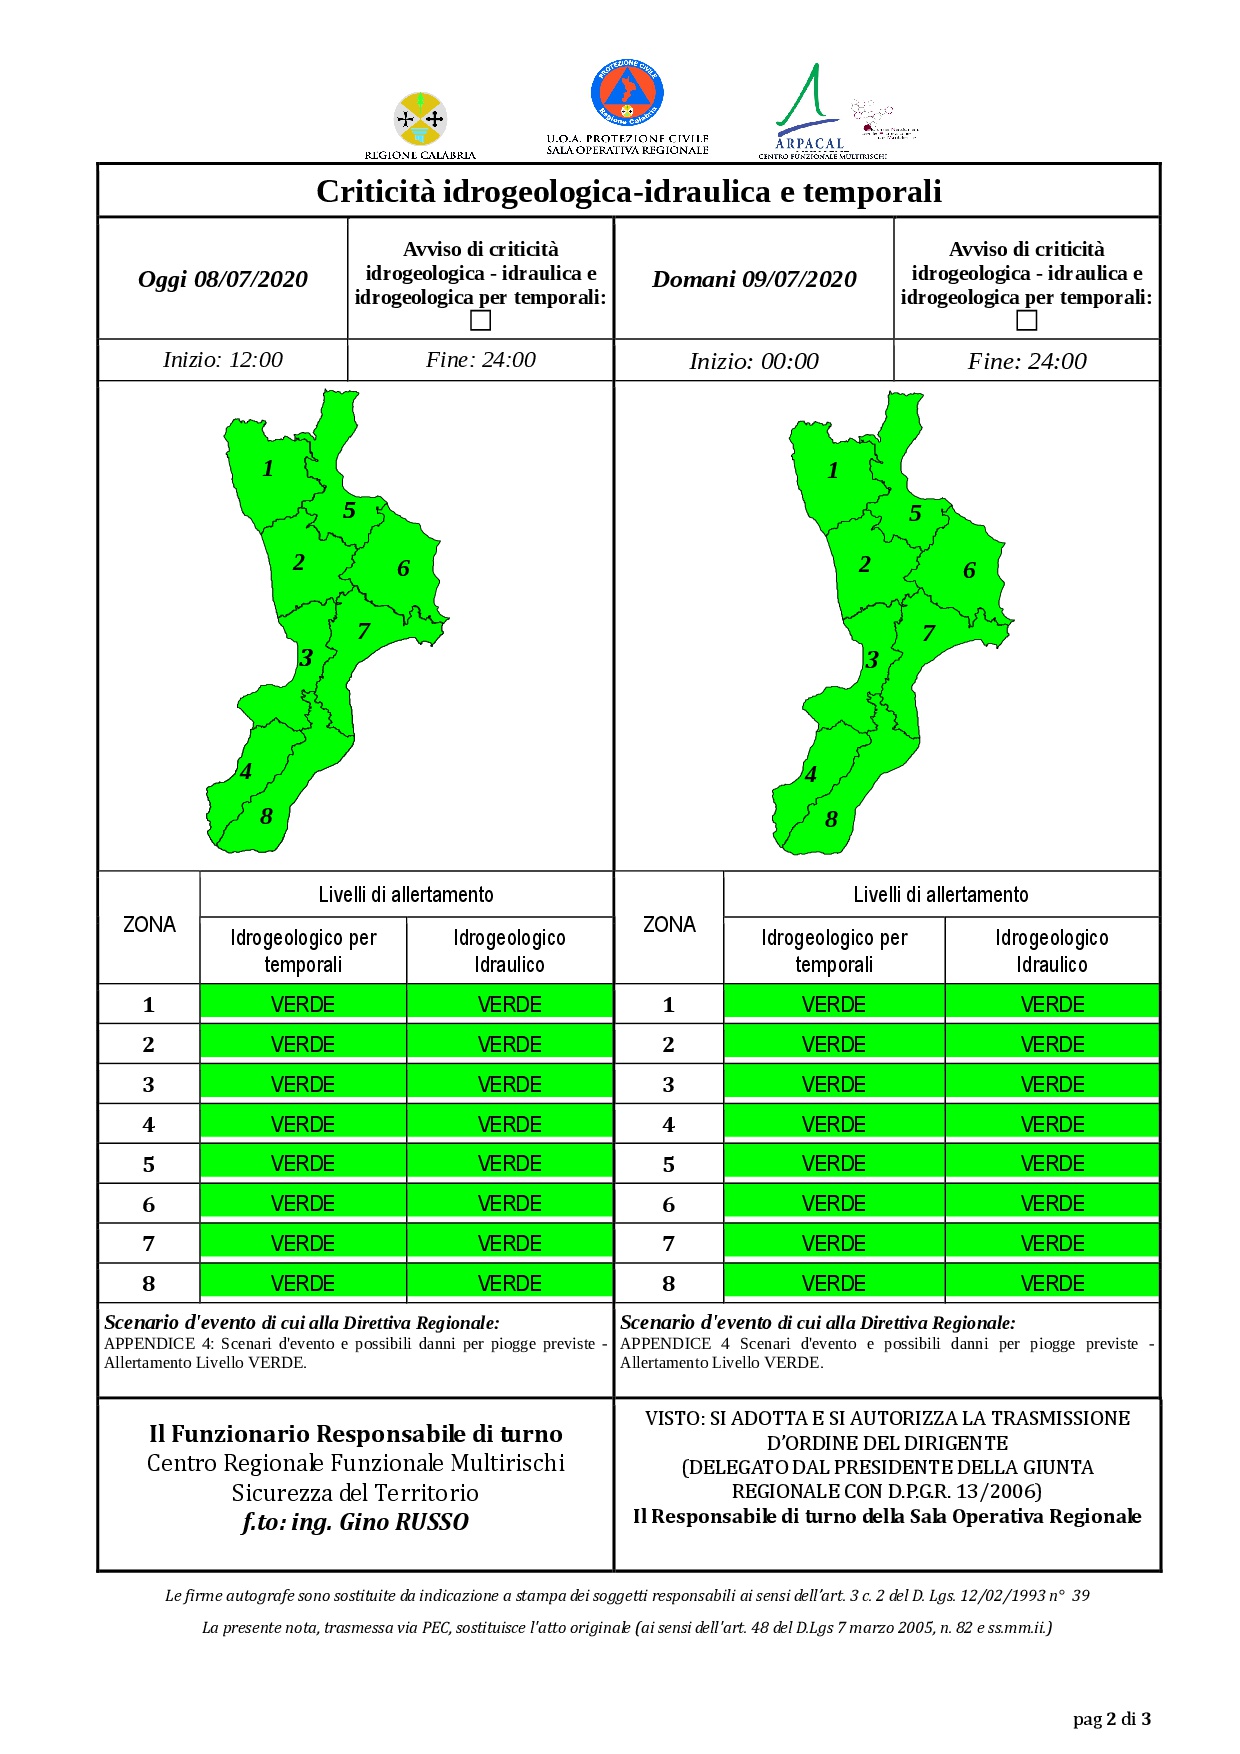 Criticità idrogeologica-idraulica e temporali in Calabria 10-07-2020